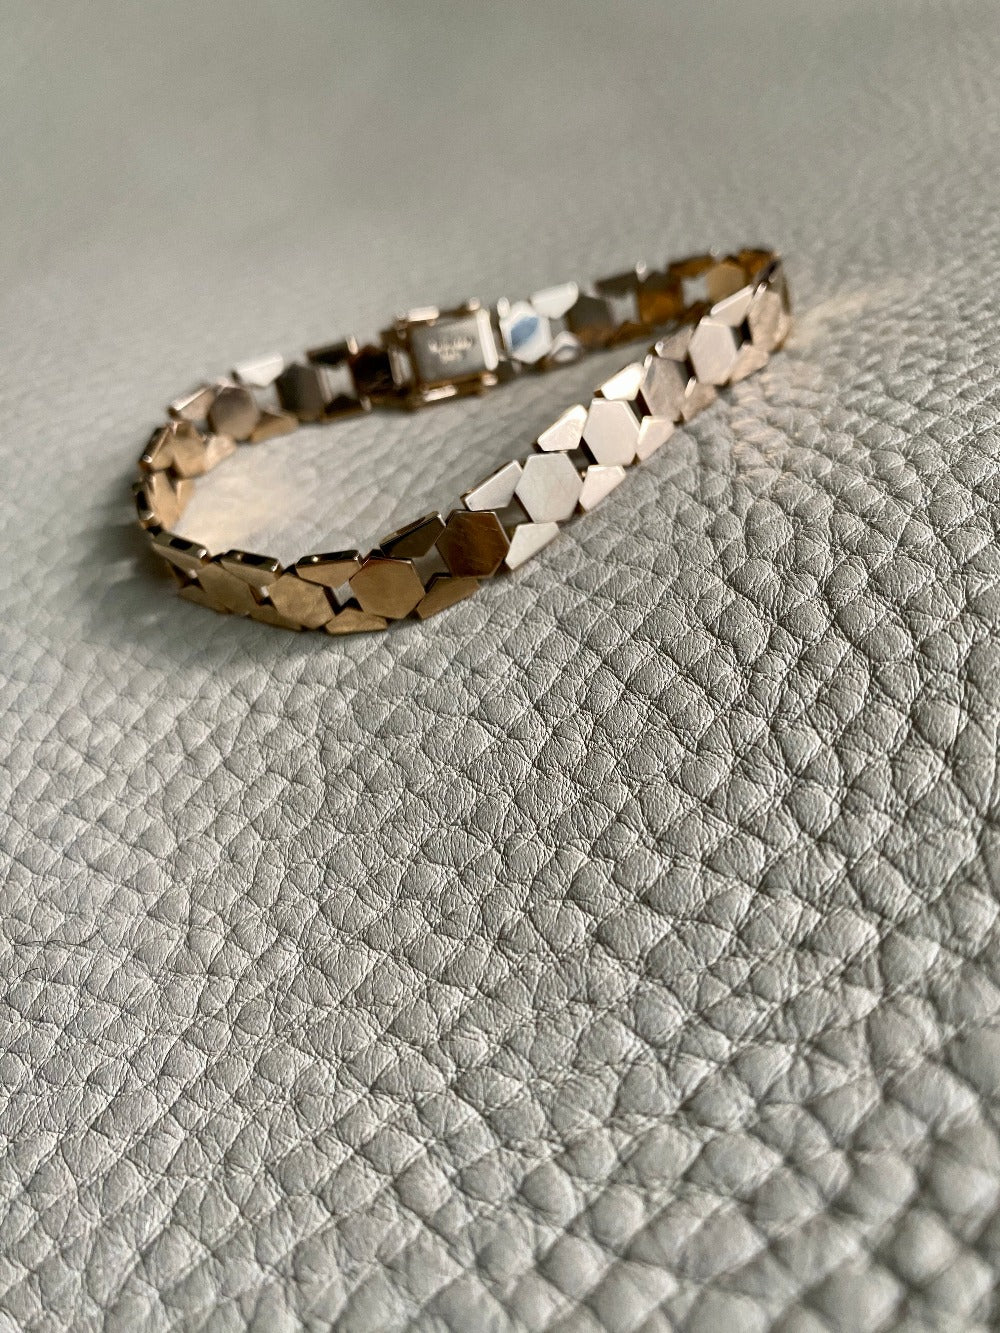 1960s/70s Danish Hexagon link 16g of 14k solid gold bracelet - 7.25 inch length